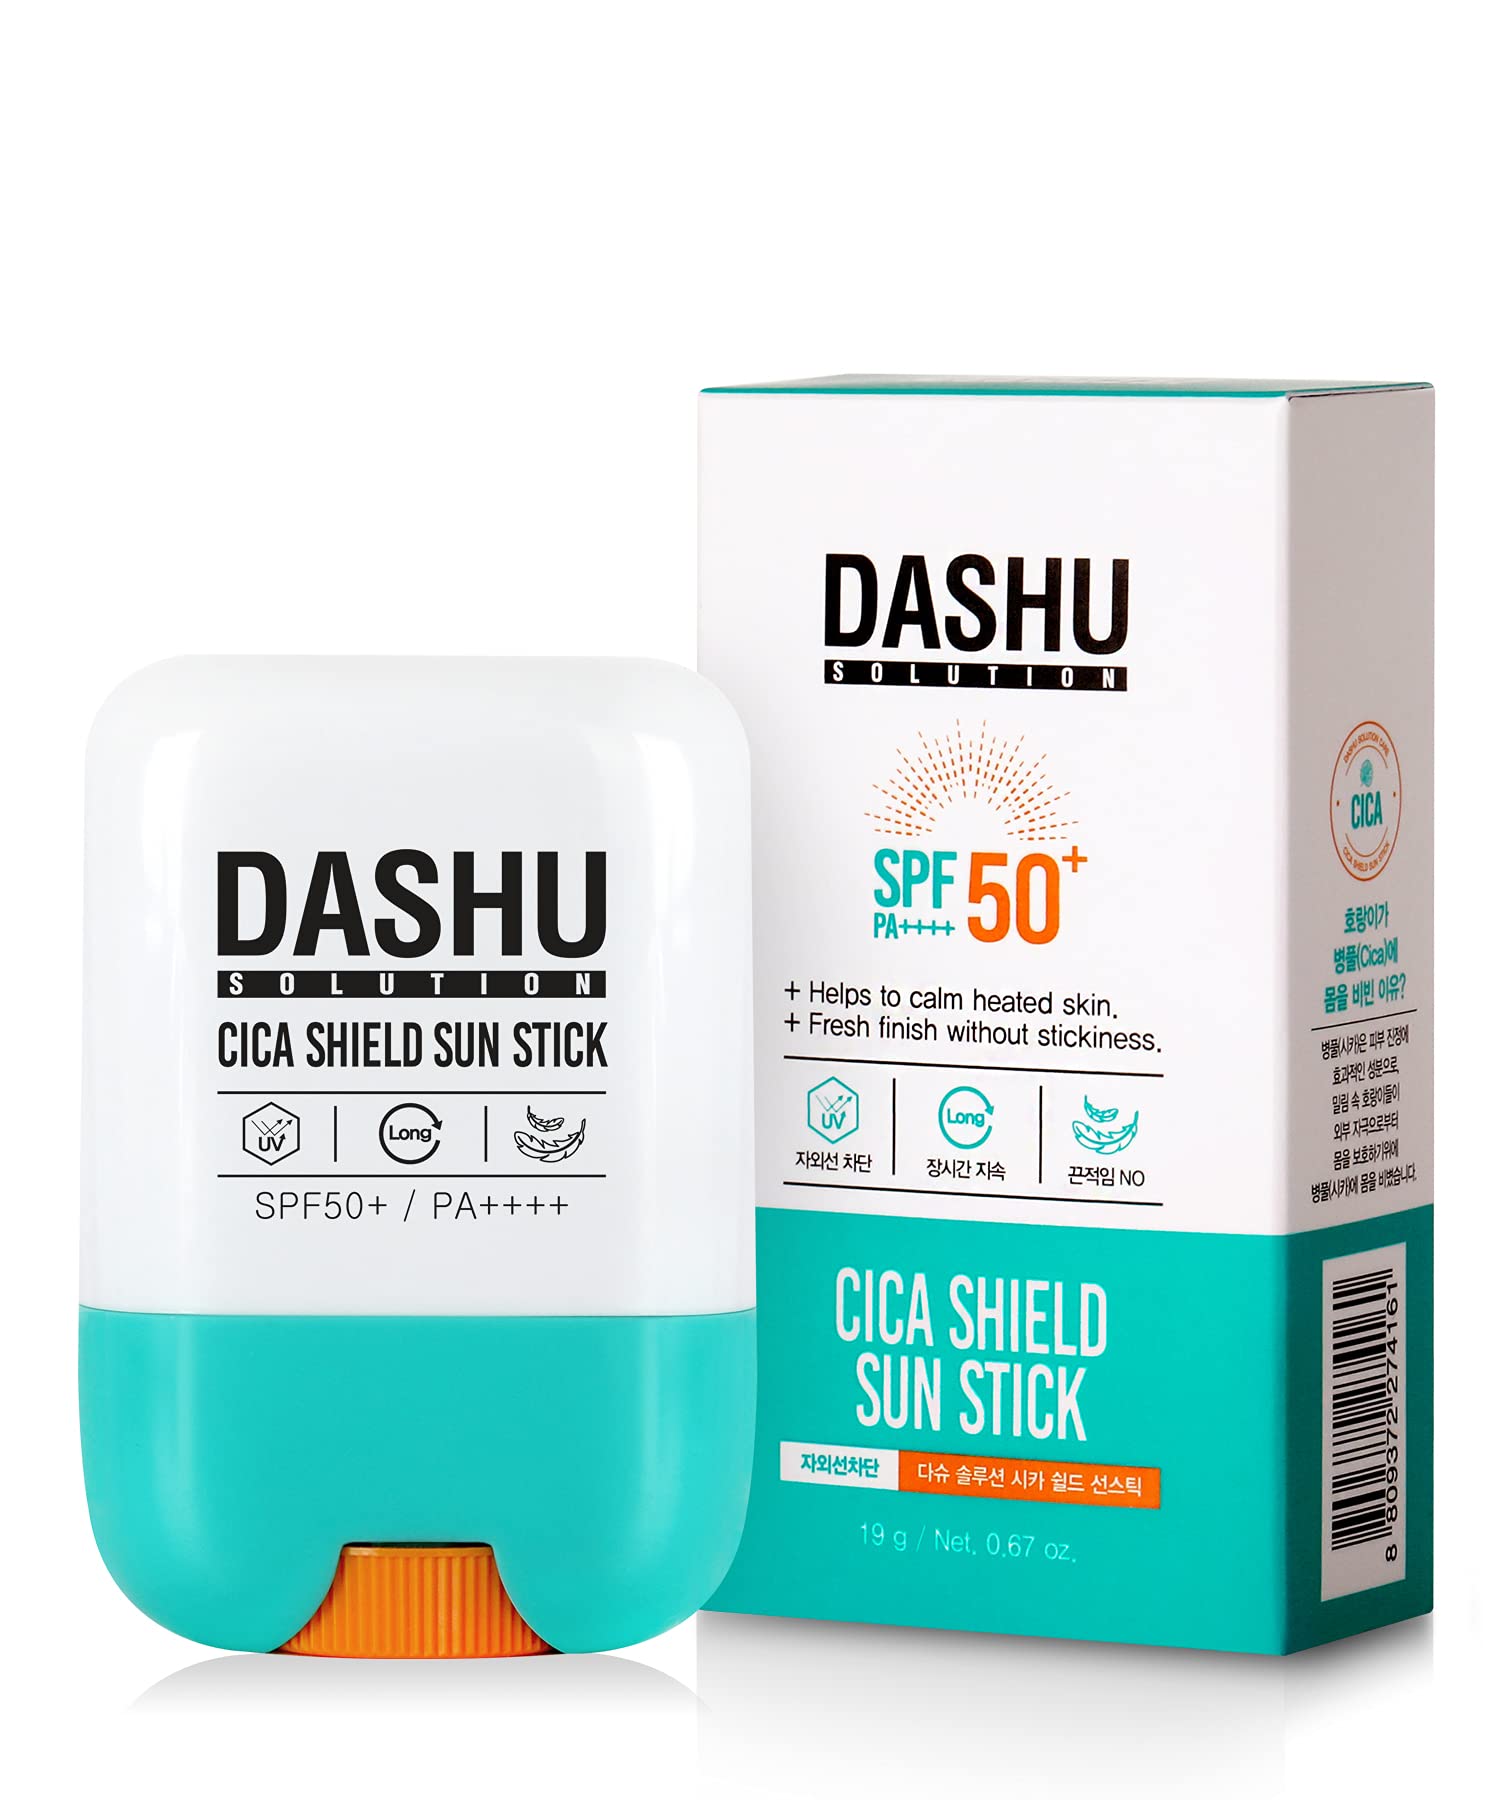 DASHU Solution Cica Shield Sun Stick .67oz Face sun stick SPF 50